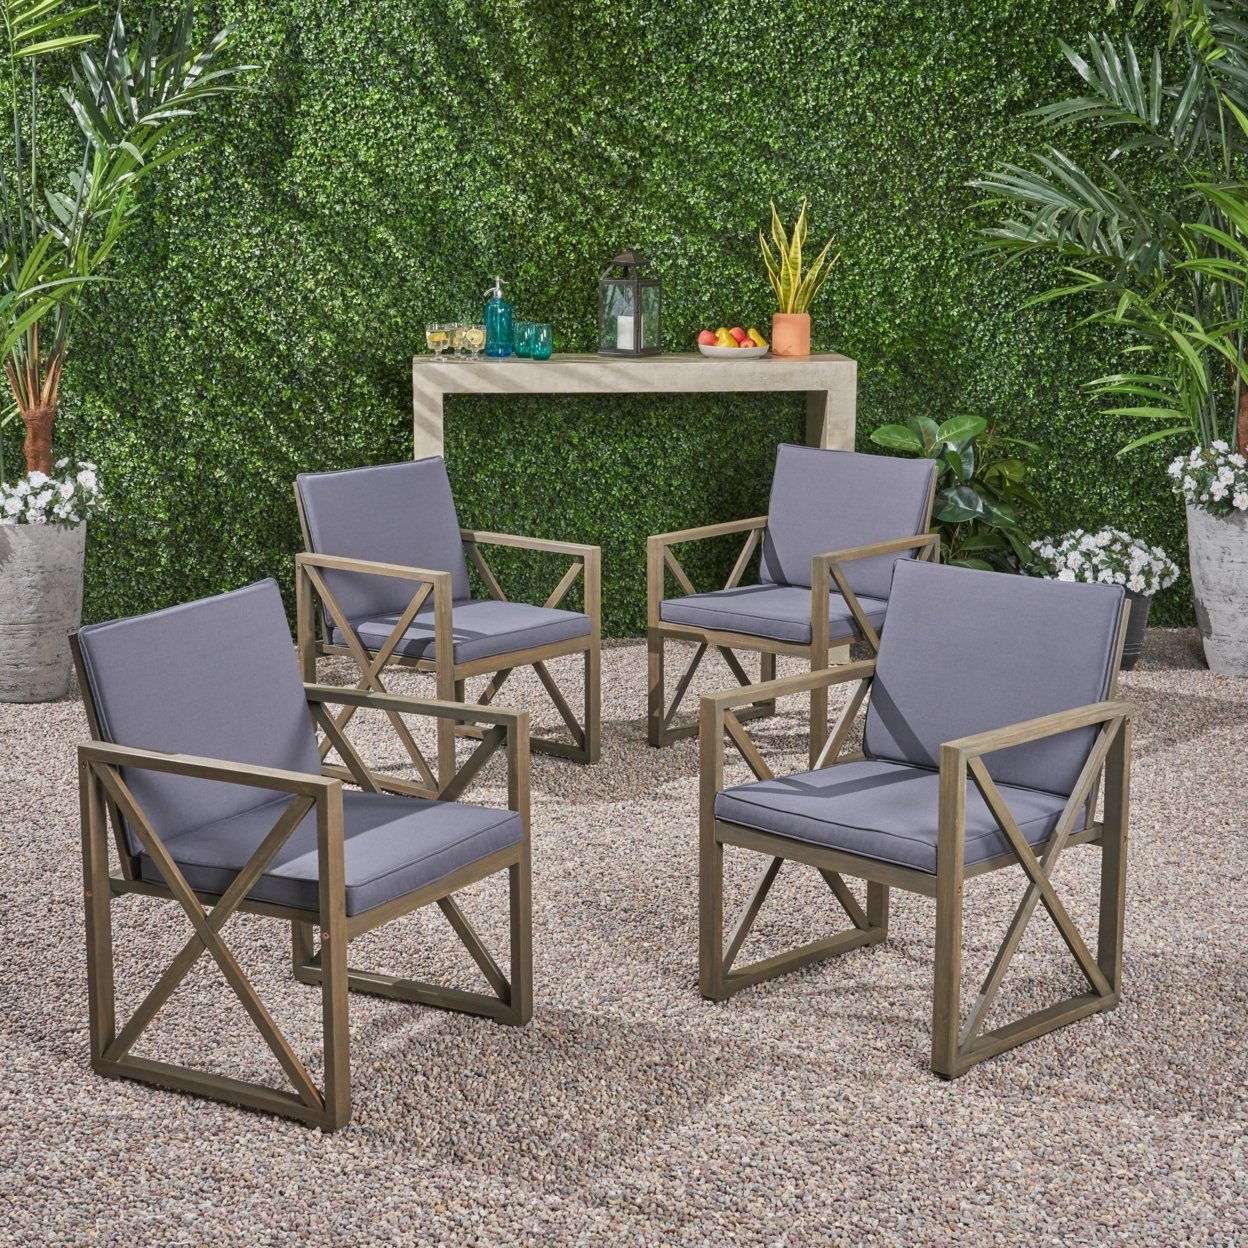 Hazel Outdoor Acacia Wood Club Chairs With Cushions - Gray / Dark Gray, Set Of 4